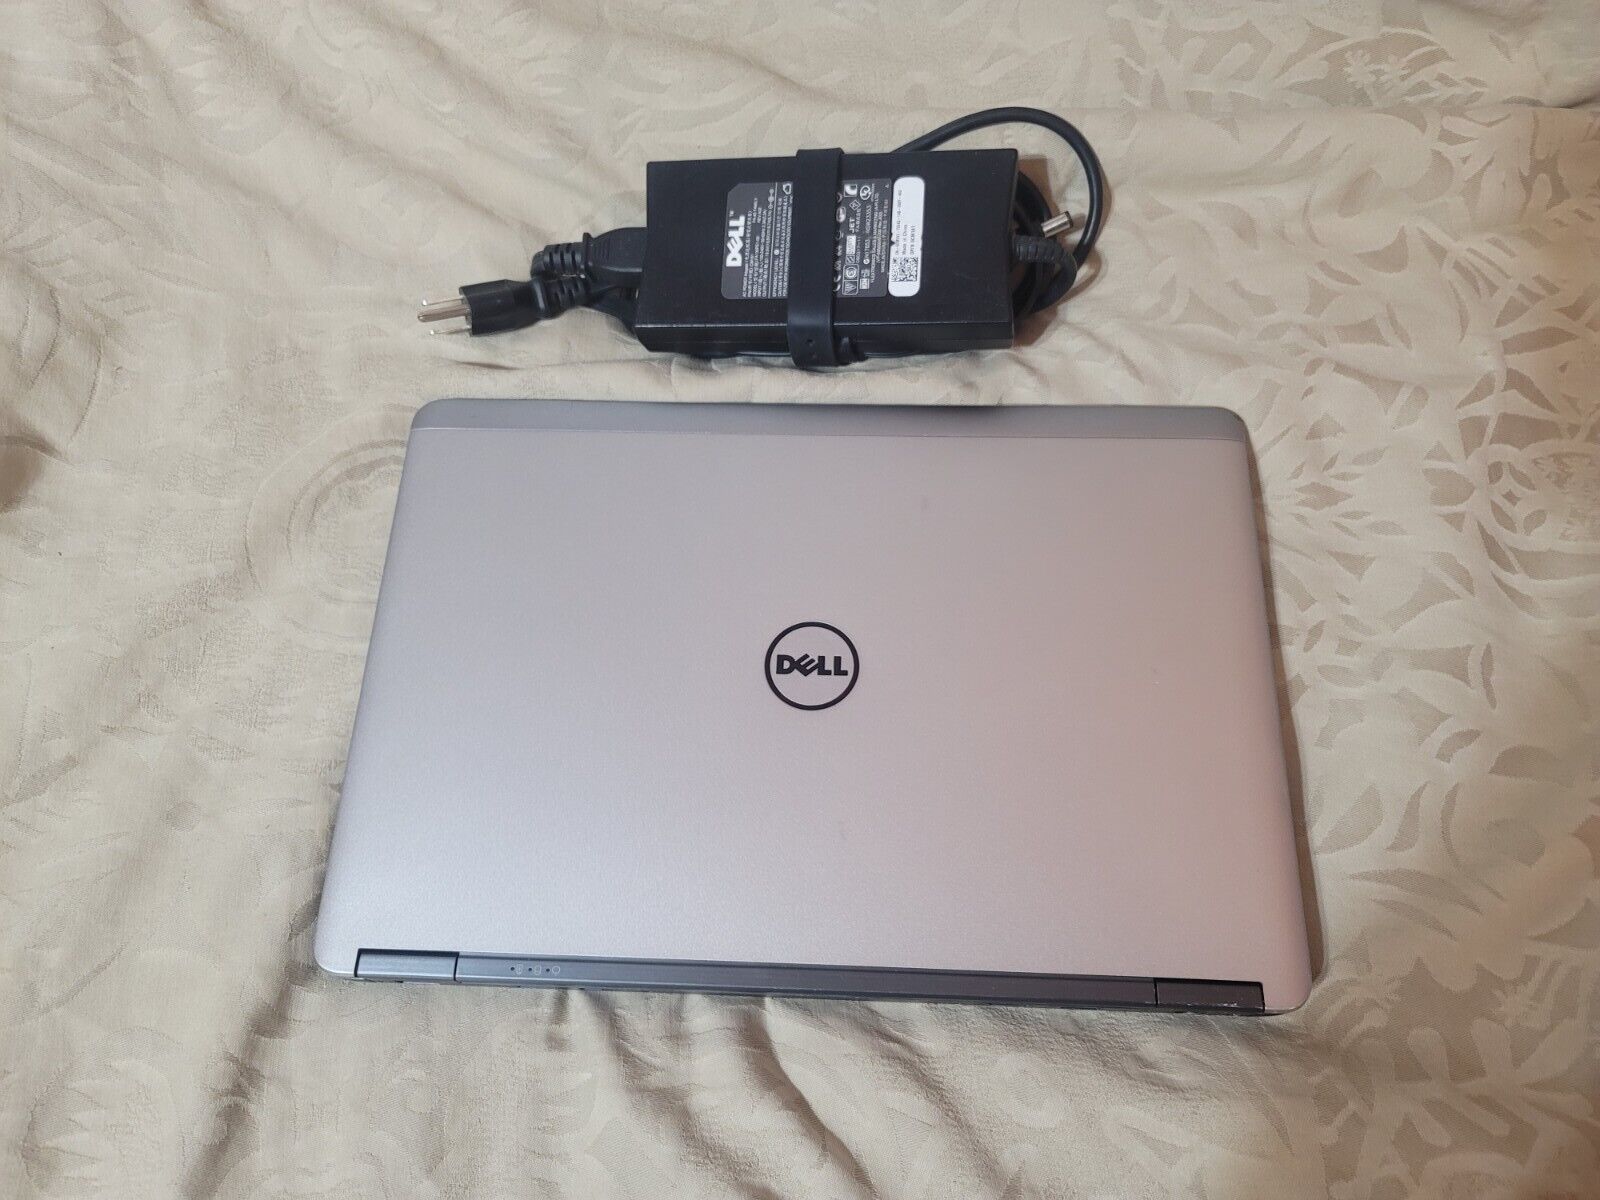 Dell Latitude E7440 Laptop - Windows 10 Pre-Activated w/ Charger